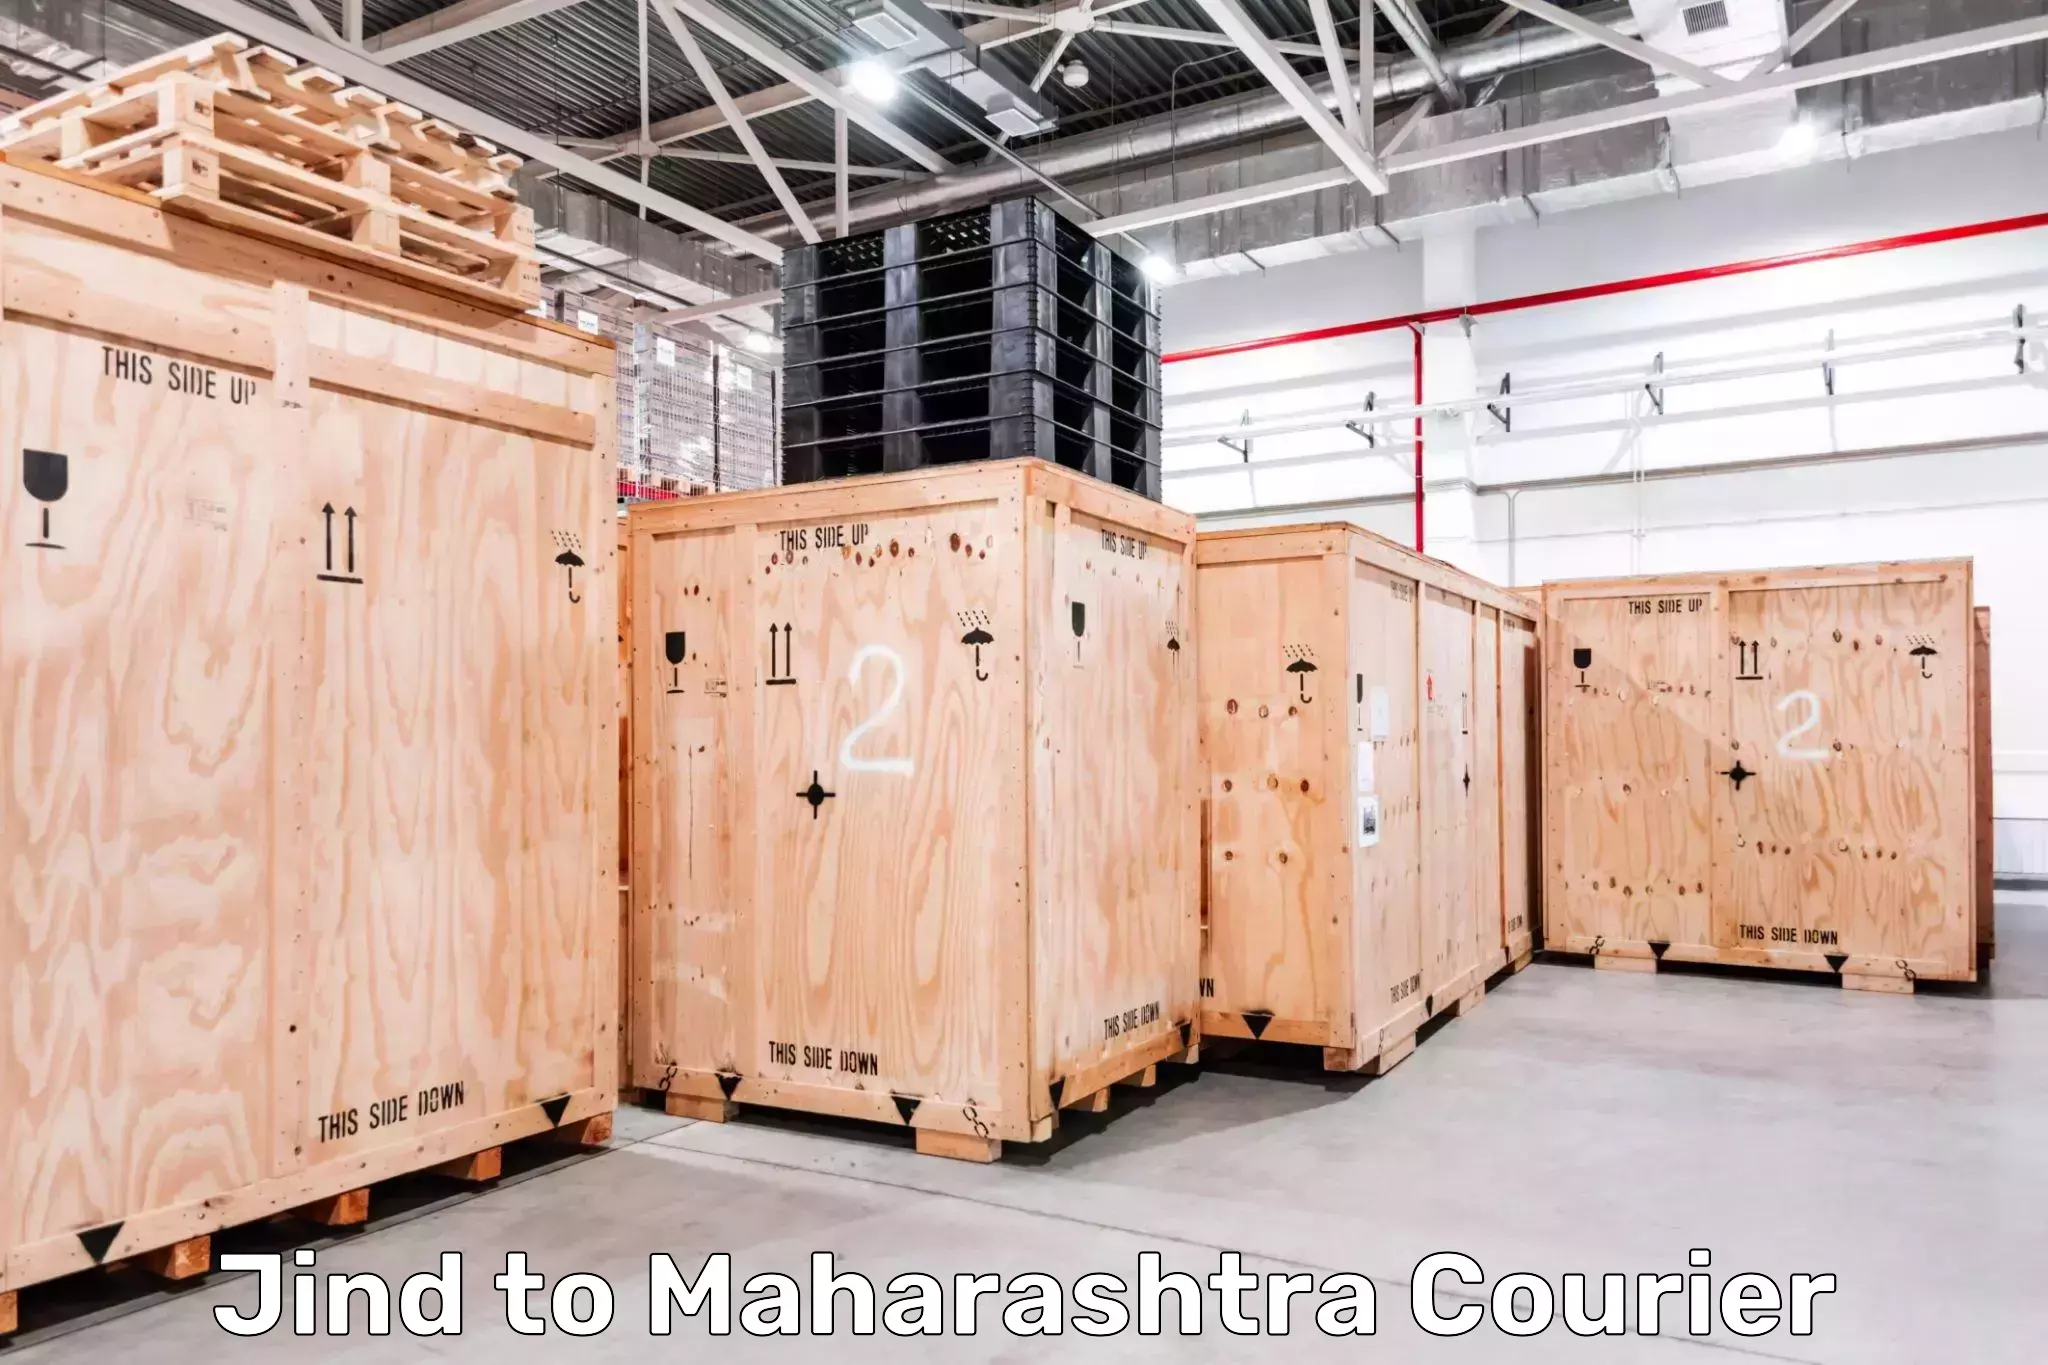 Comprehensive shipping network Jind to Maharashtra